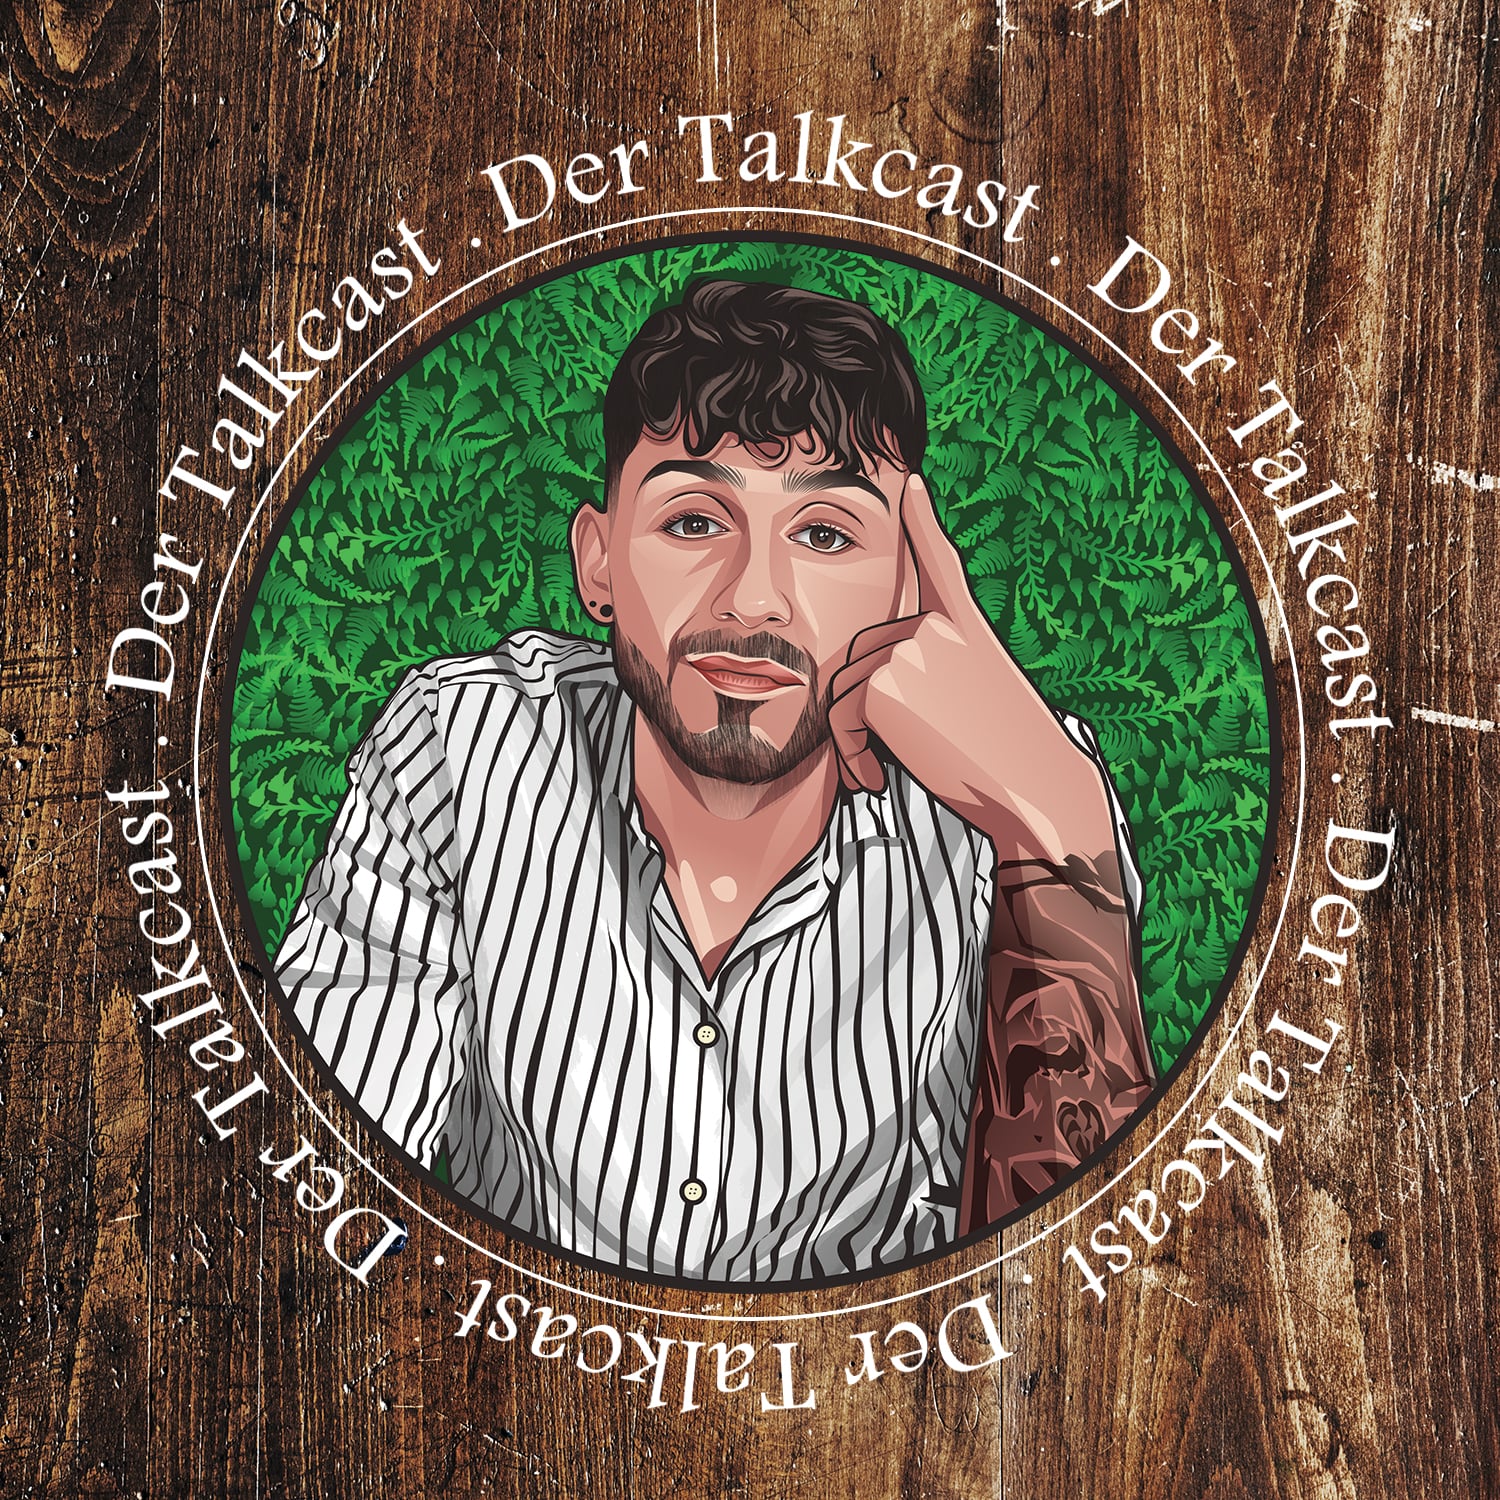 Der Talkcast